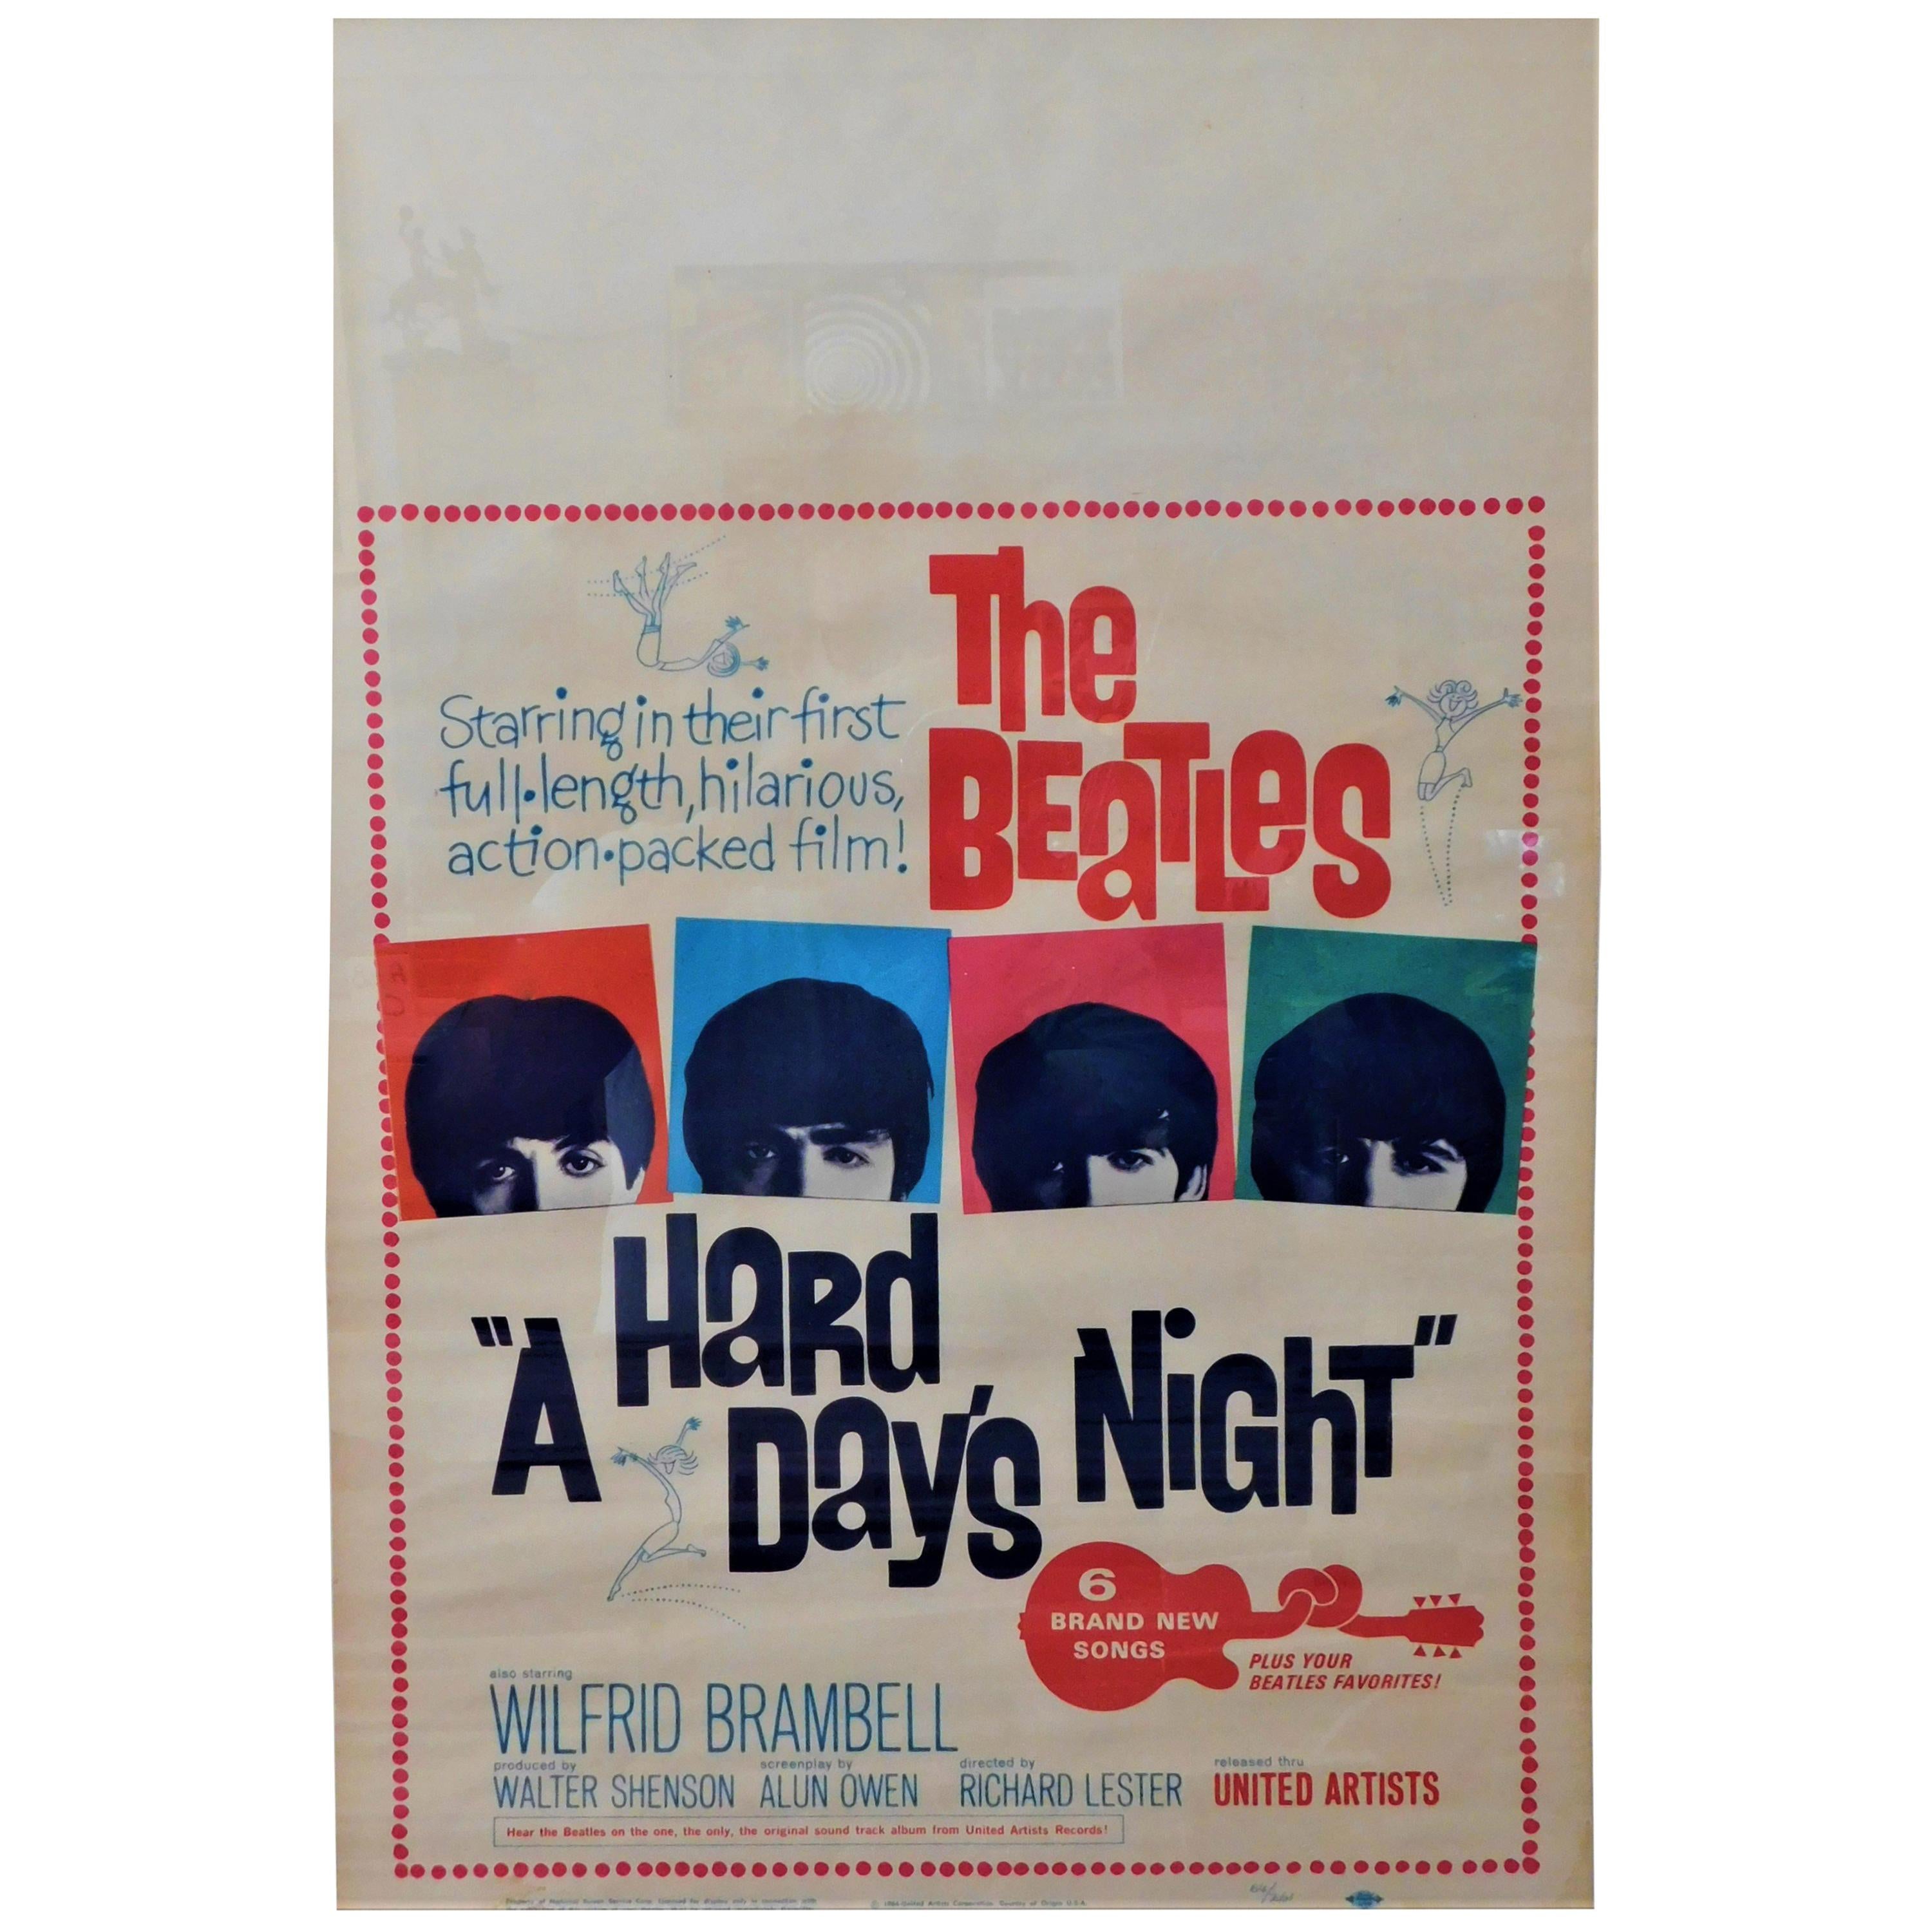 The Beatles Original a Hard Days Night Window Card For Sale